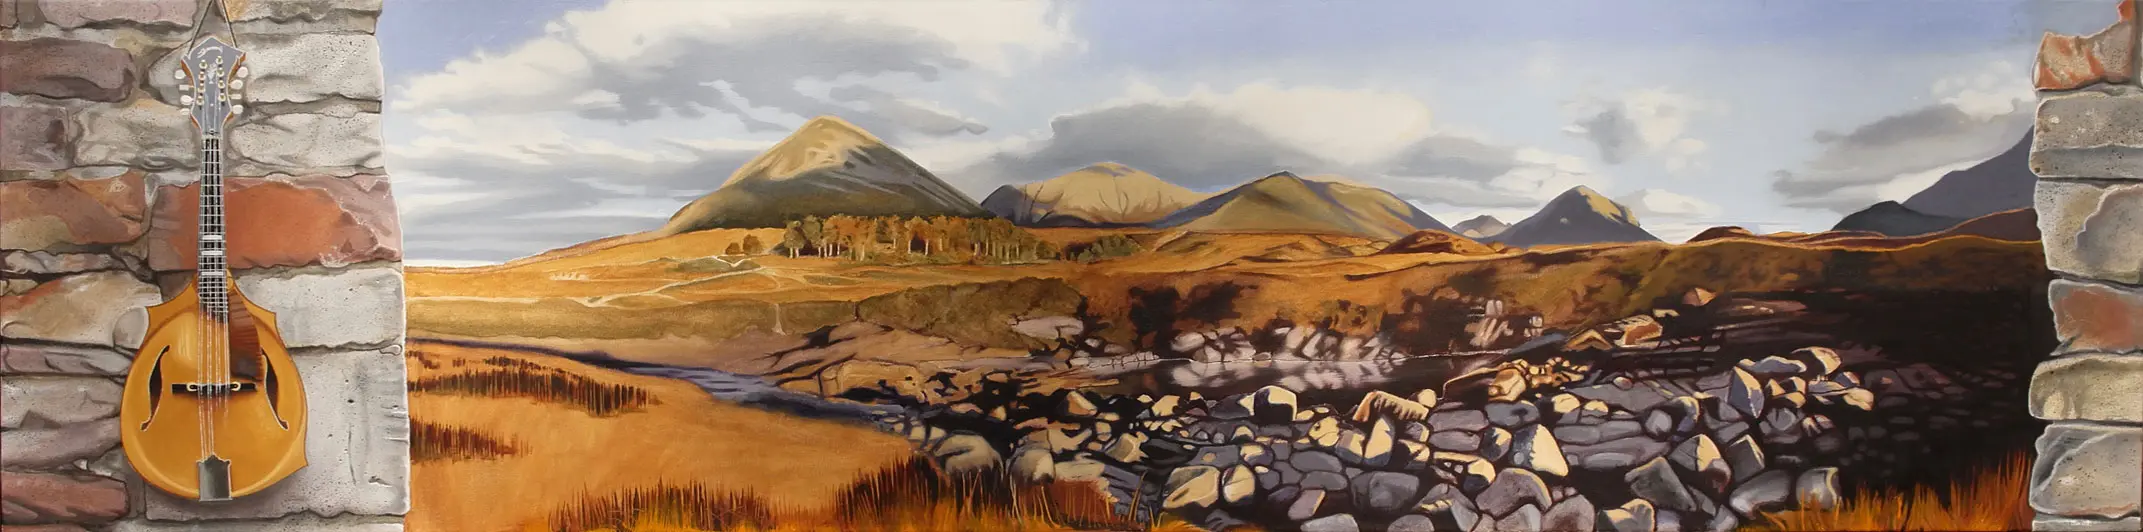 Isle of skye, Scotland 50 x 200 cm, Öl auf Leinwand (2017)